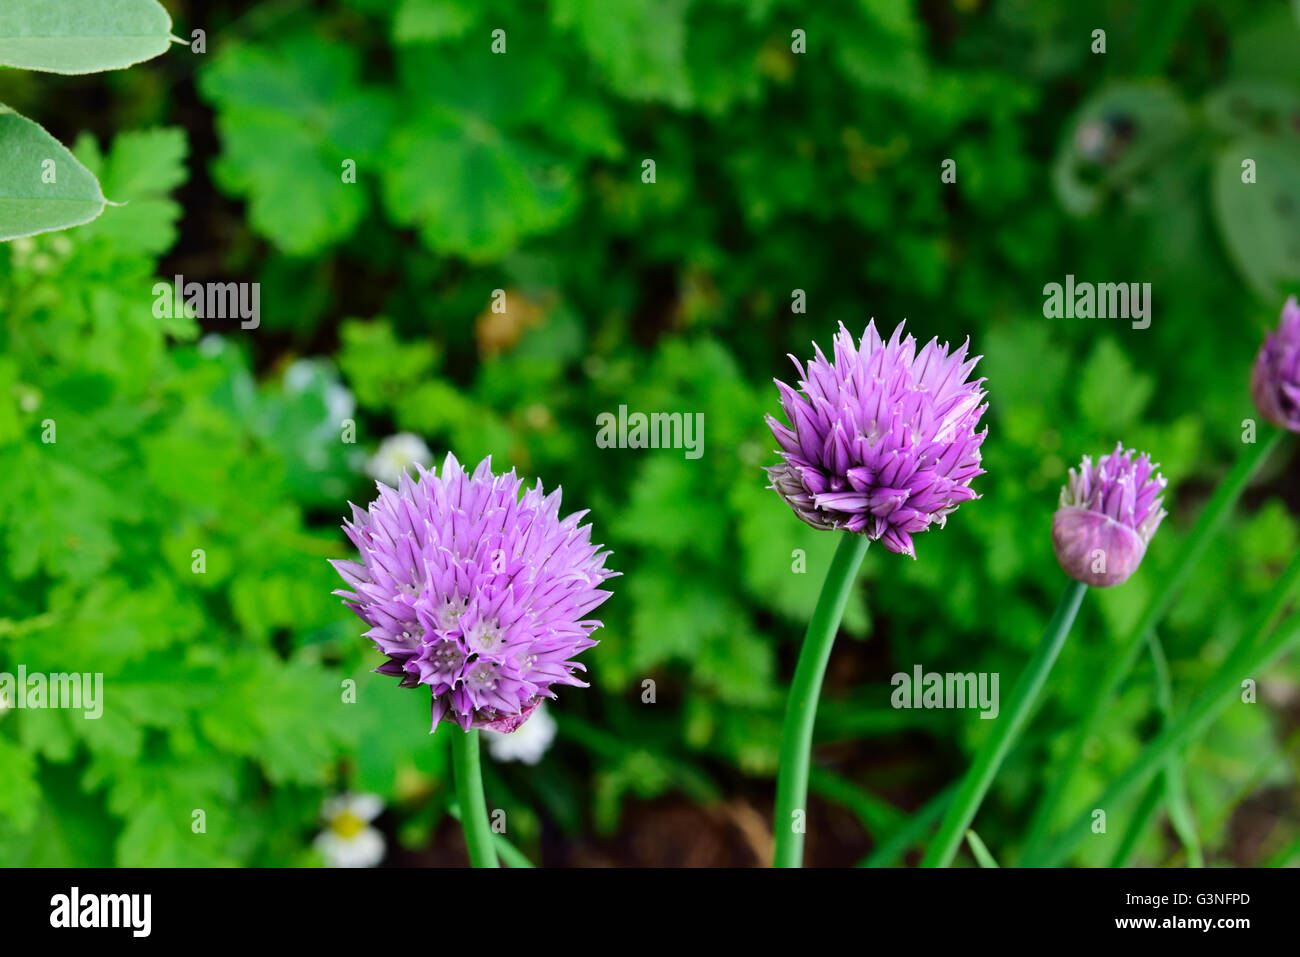 Flowers of common edible chives, Allium schoenoprasum, in garden Stock Photo